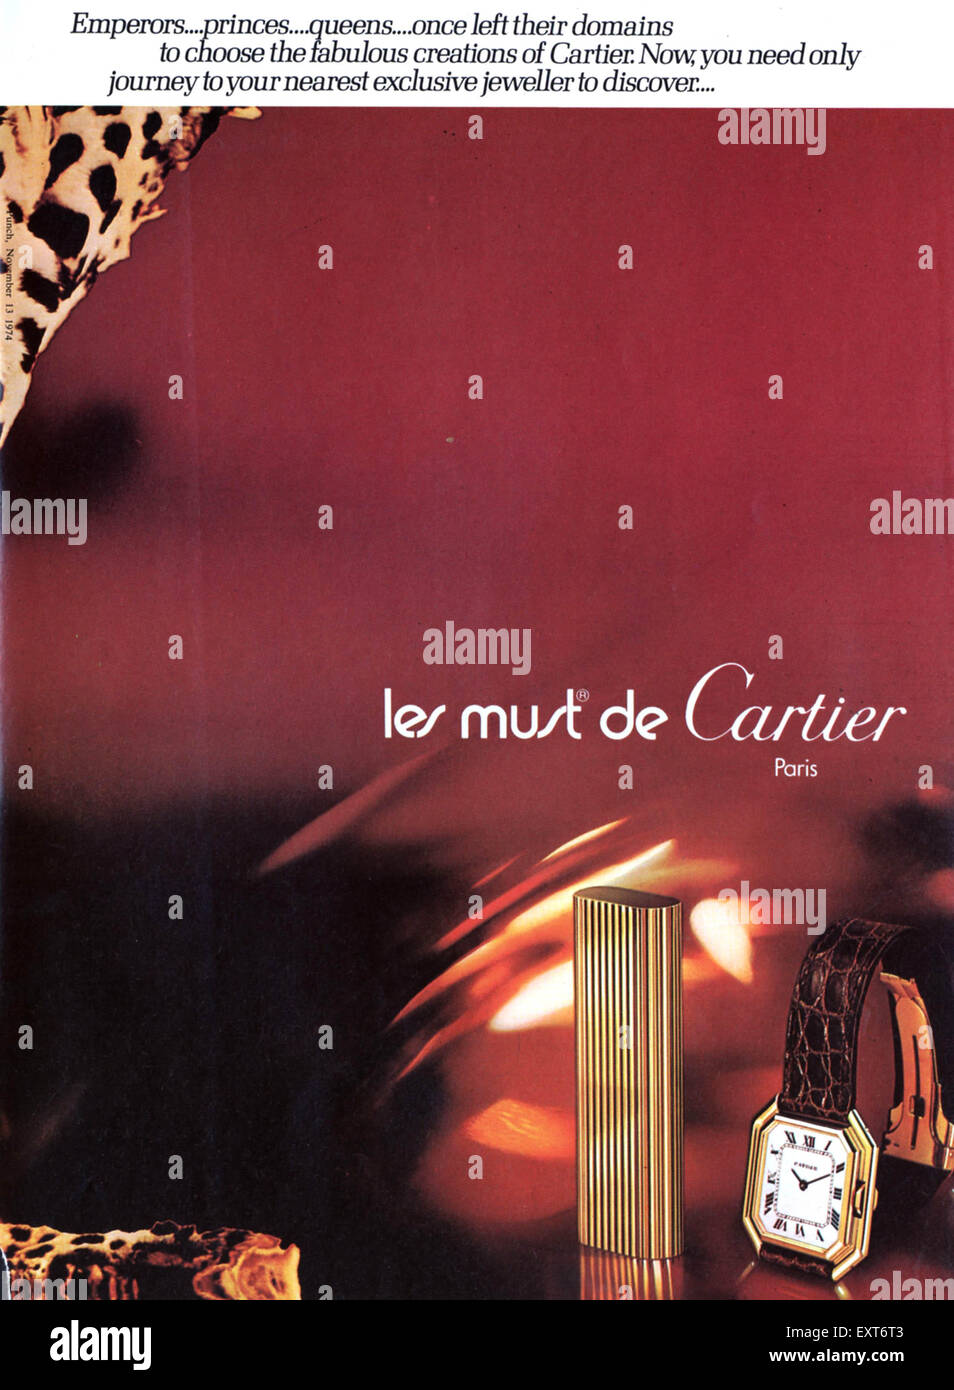 1970s UK Cartier Magazine Advert Stock Photo - Alamy